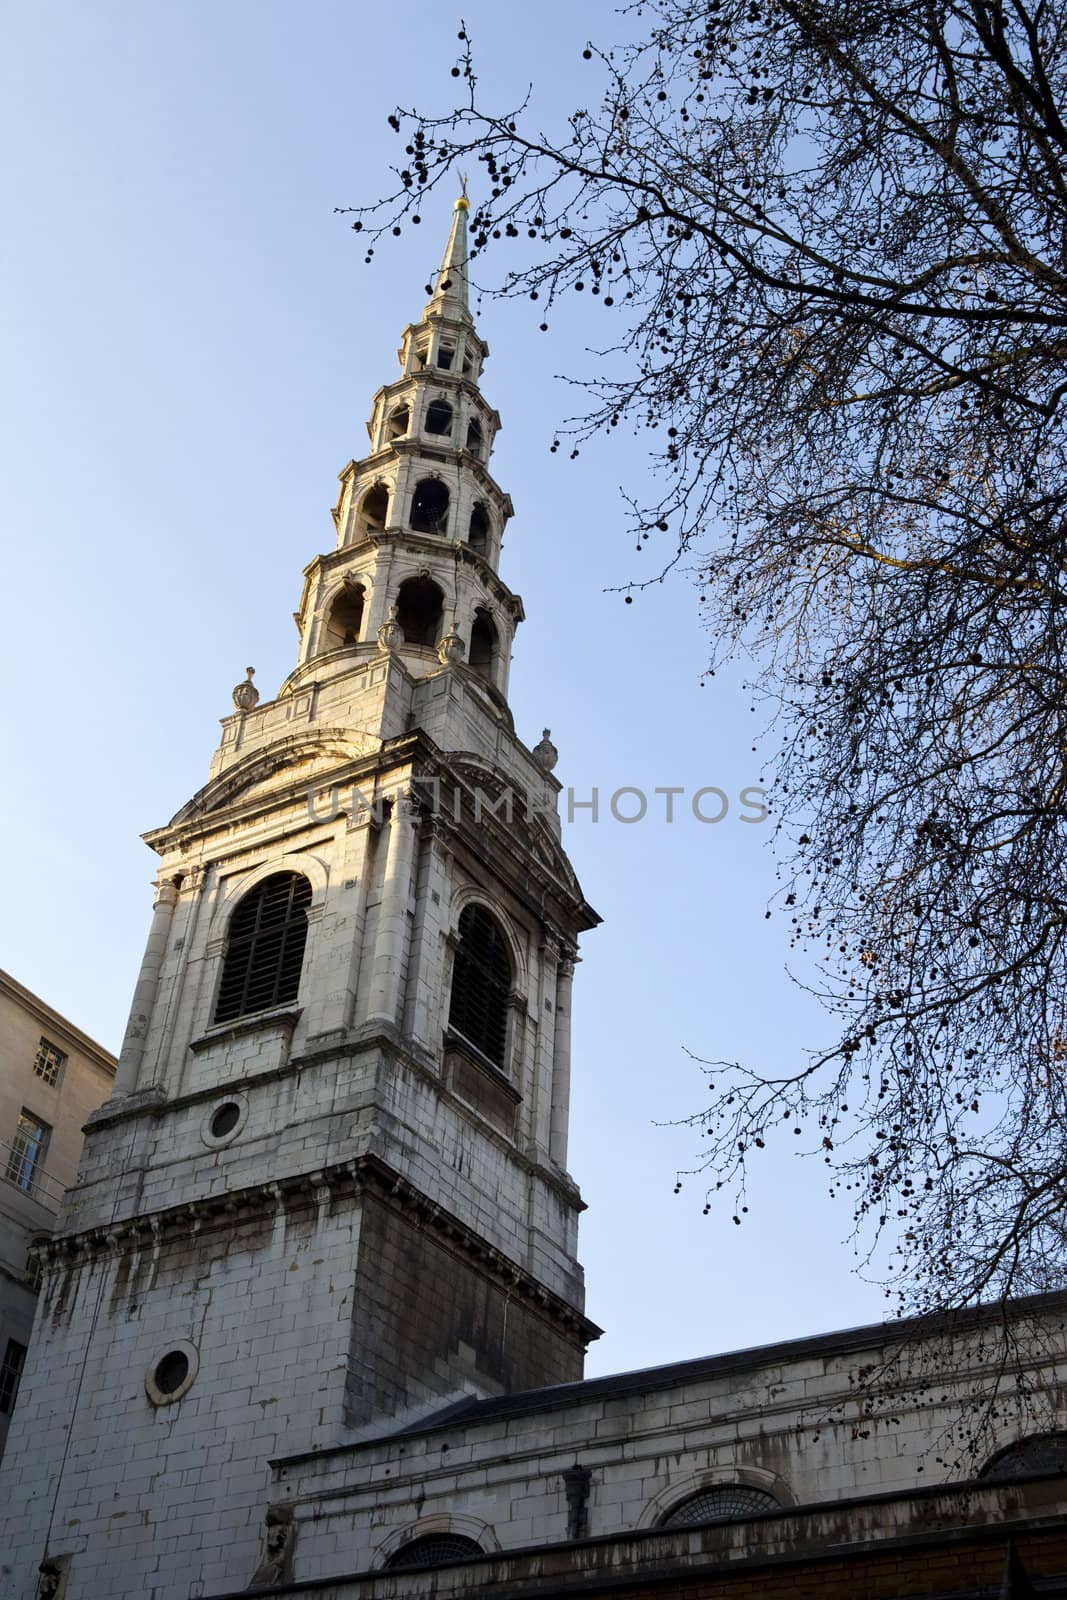 St. Bride's Church in Fleet Street, London by chrisdorney